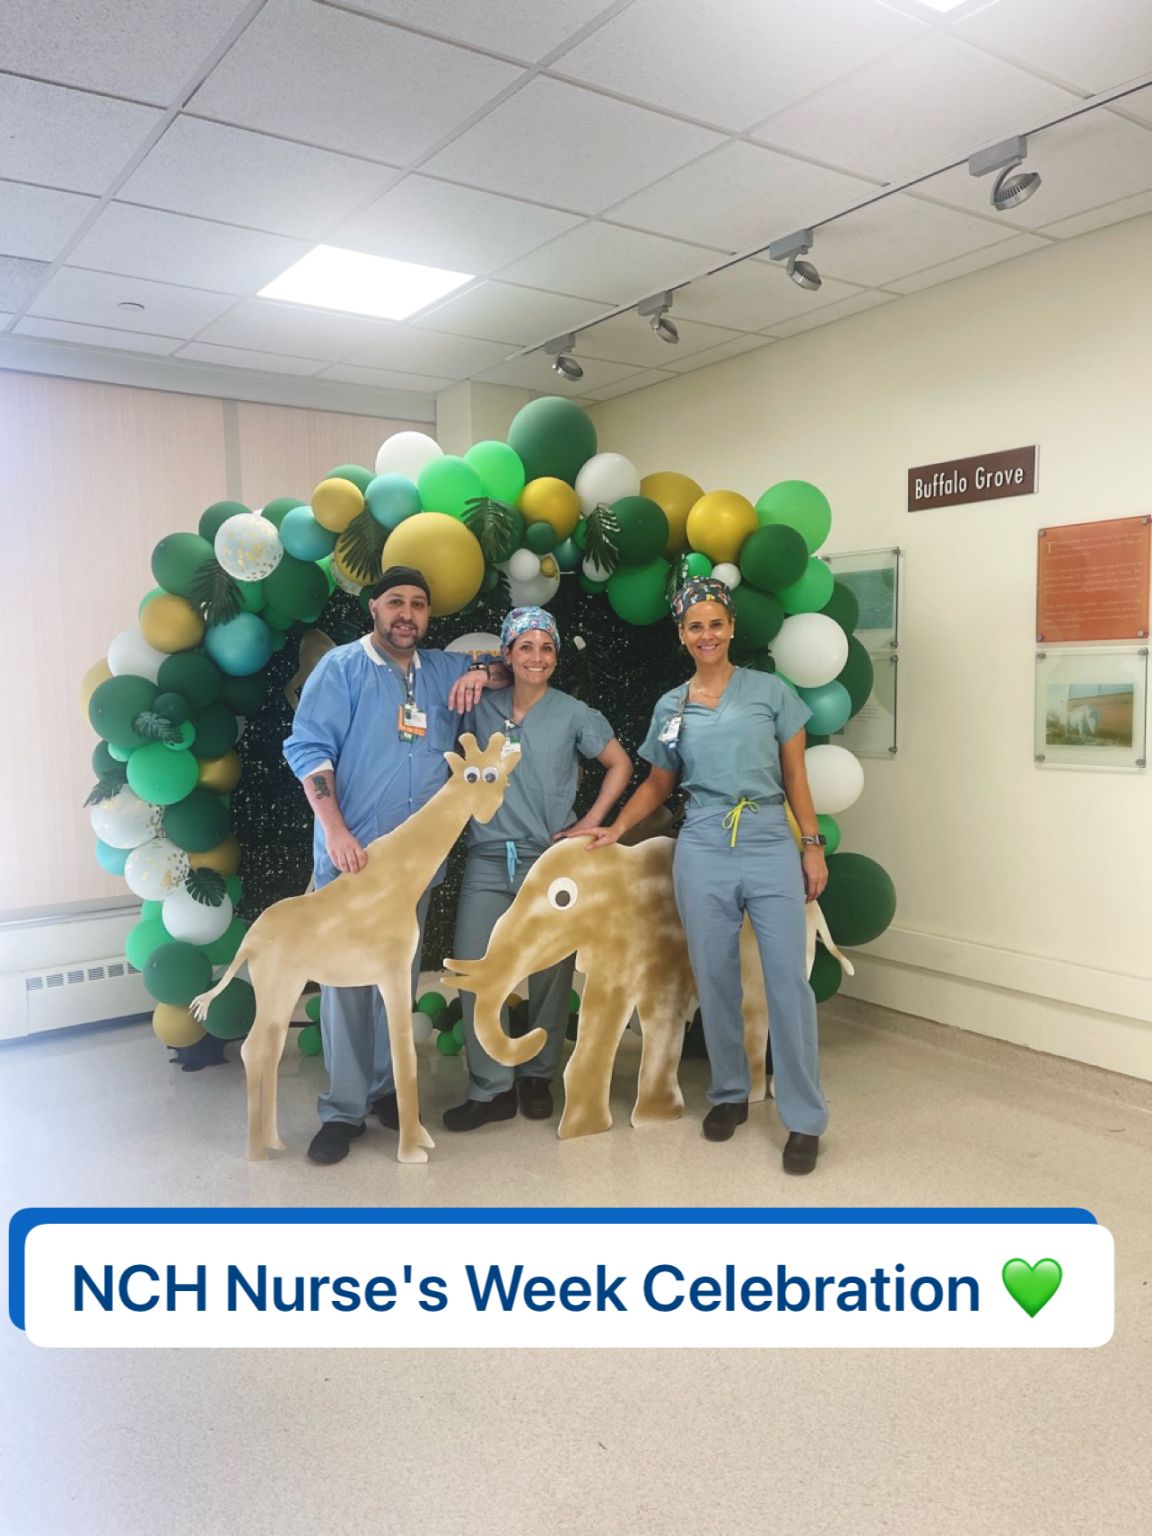 Nicole McCall MSN, RN on LinkedIn: NCH NorthShore Nurse’s Week ...